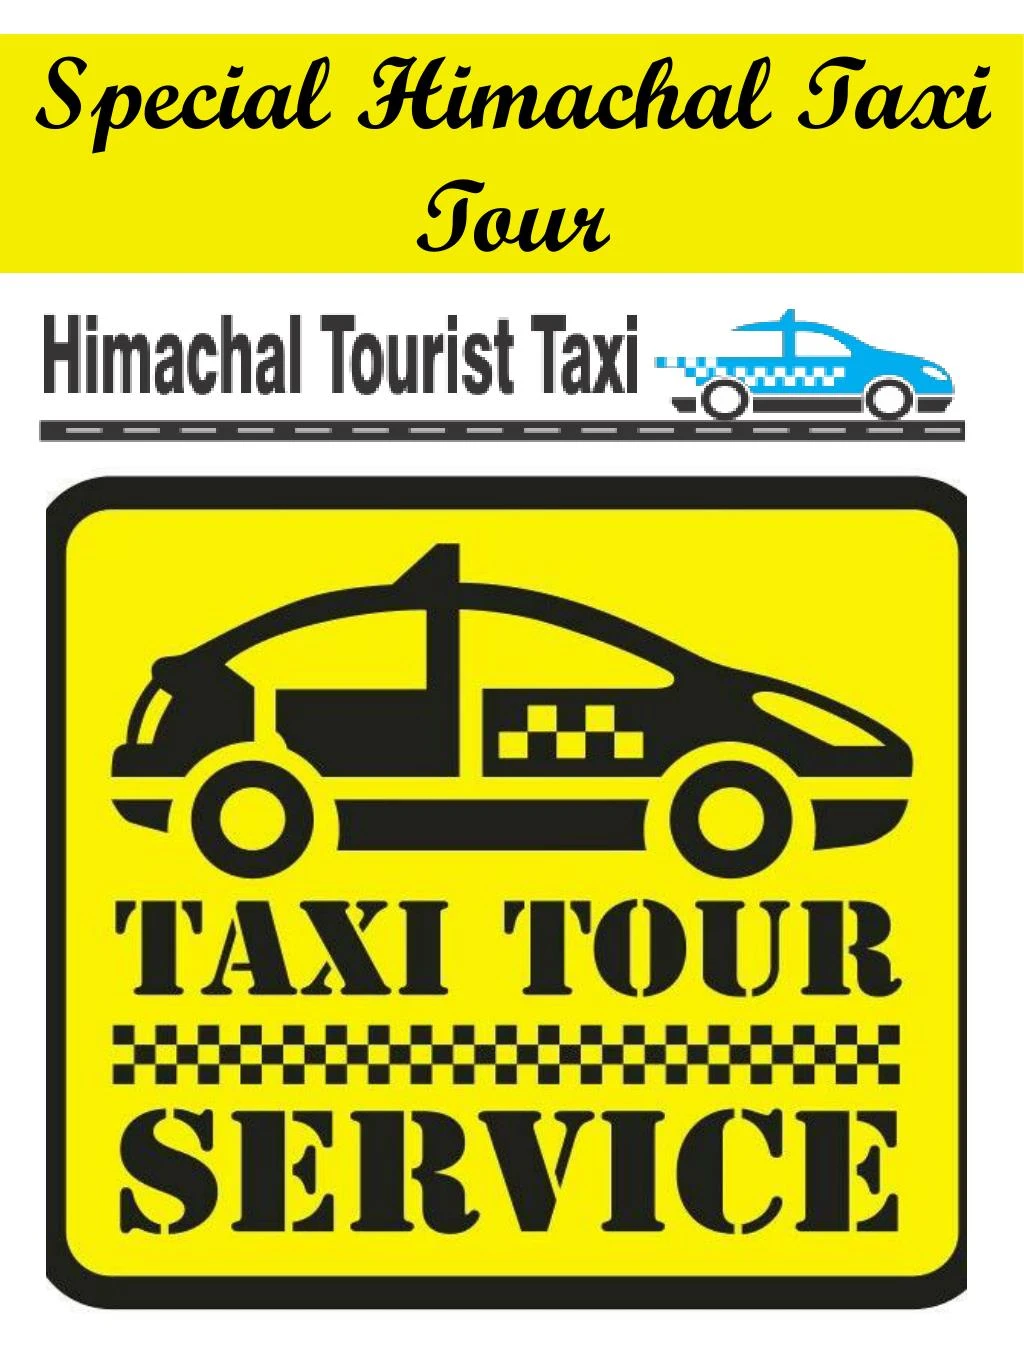 special himachal taxi tour